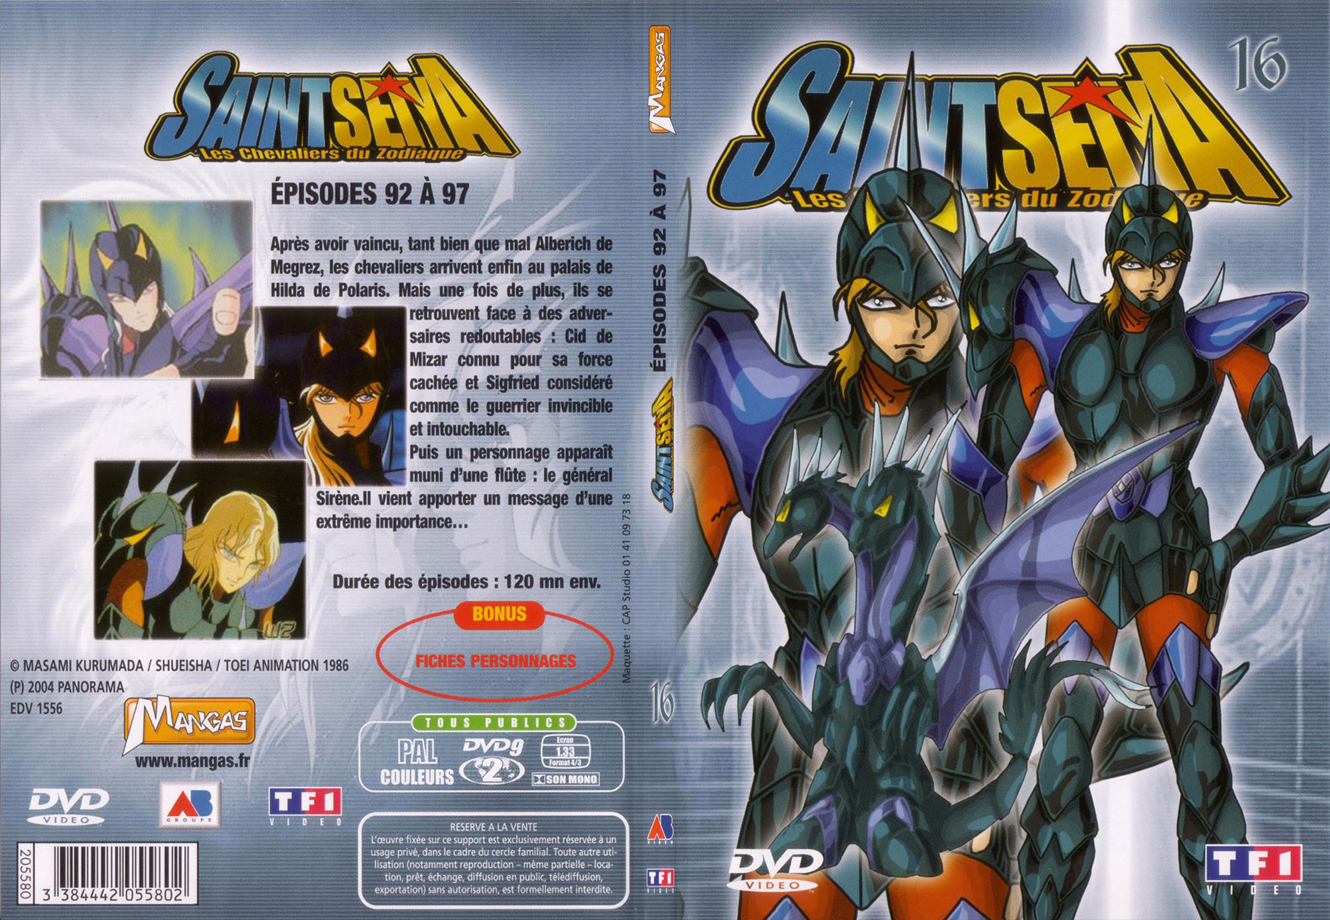 Jaquette DVD Saint Seiya vol 16 - SLIM